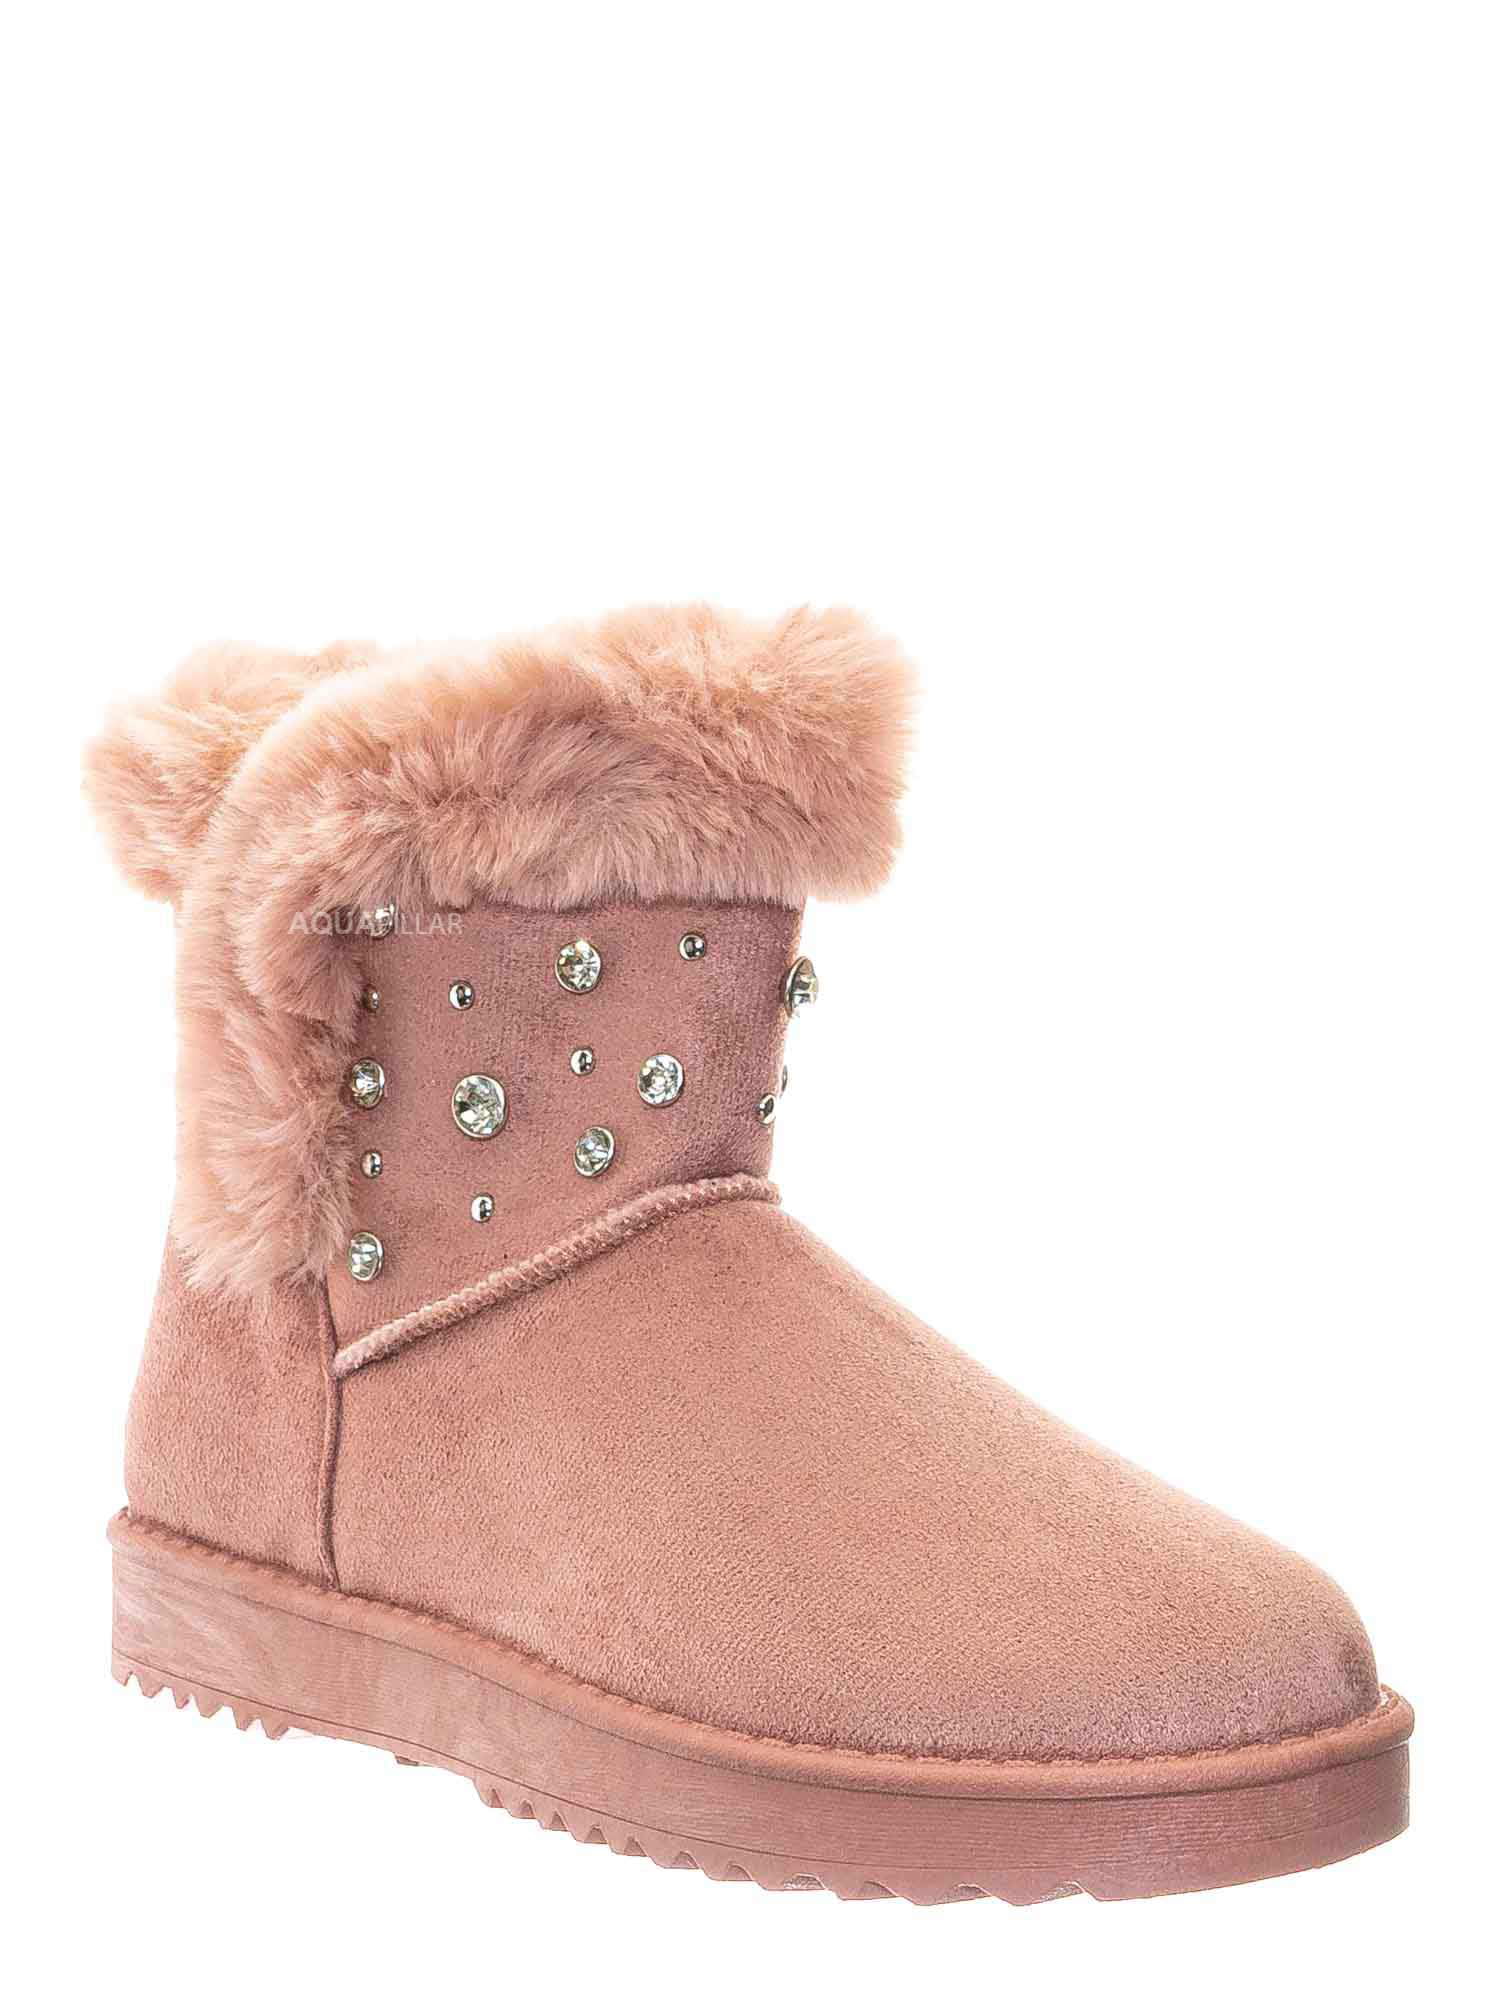 Women's Winter Ankle Snow Boots Faux Fur Multi-color Rhinestone Outdoor Shoes SZ